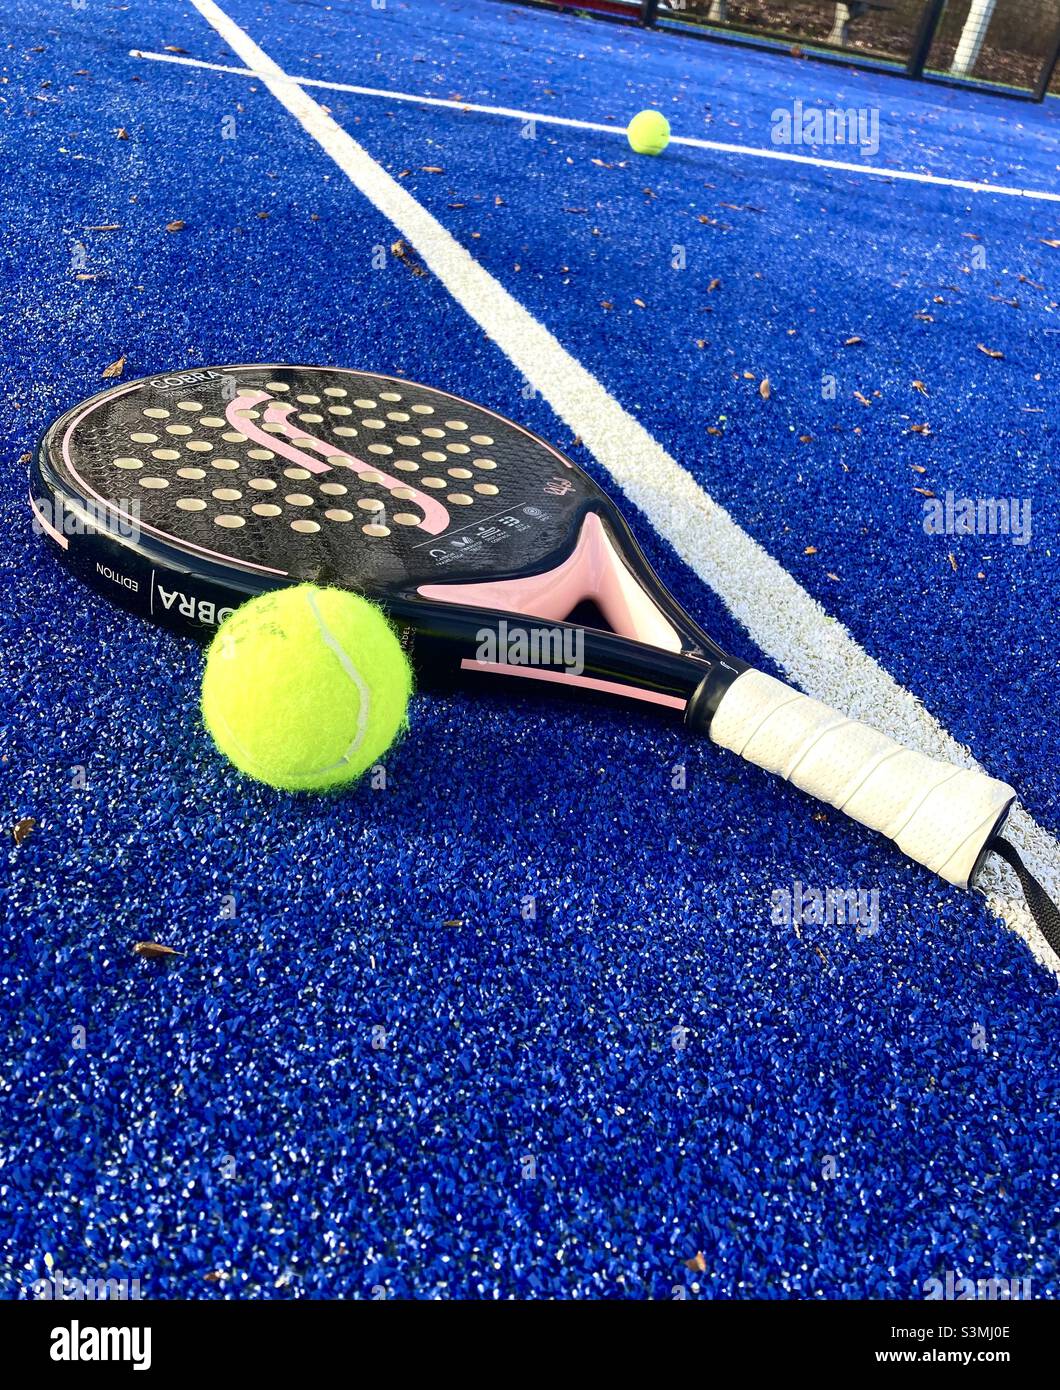 https://c8.alamy.com/comp/S3MJ0E/padel-racket-with-padel-ball-on-the-padel-court-S3MJ0E.jpg